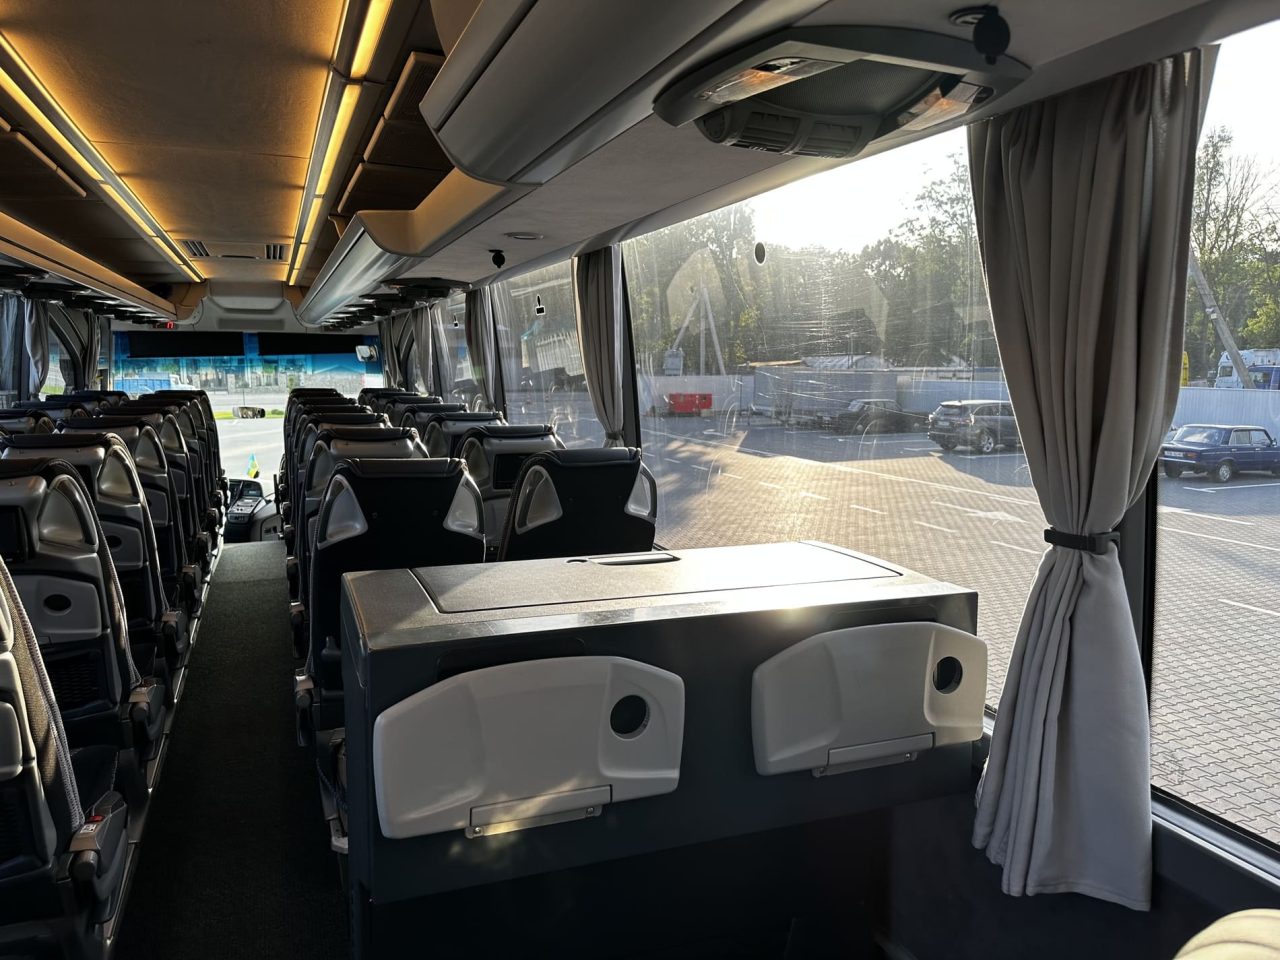 vk-tour-bus- (14)